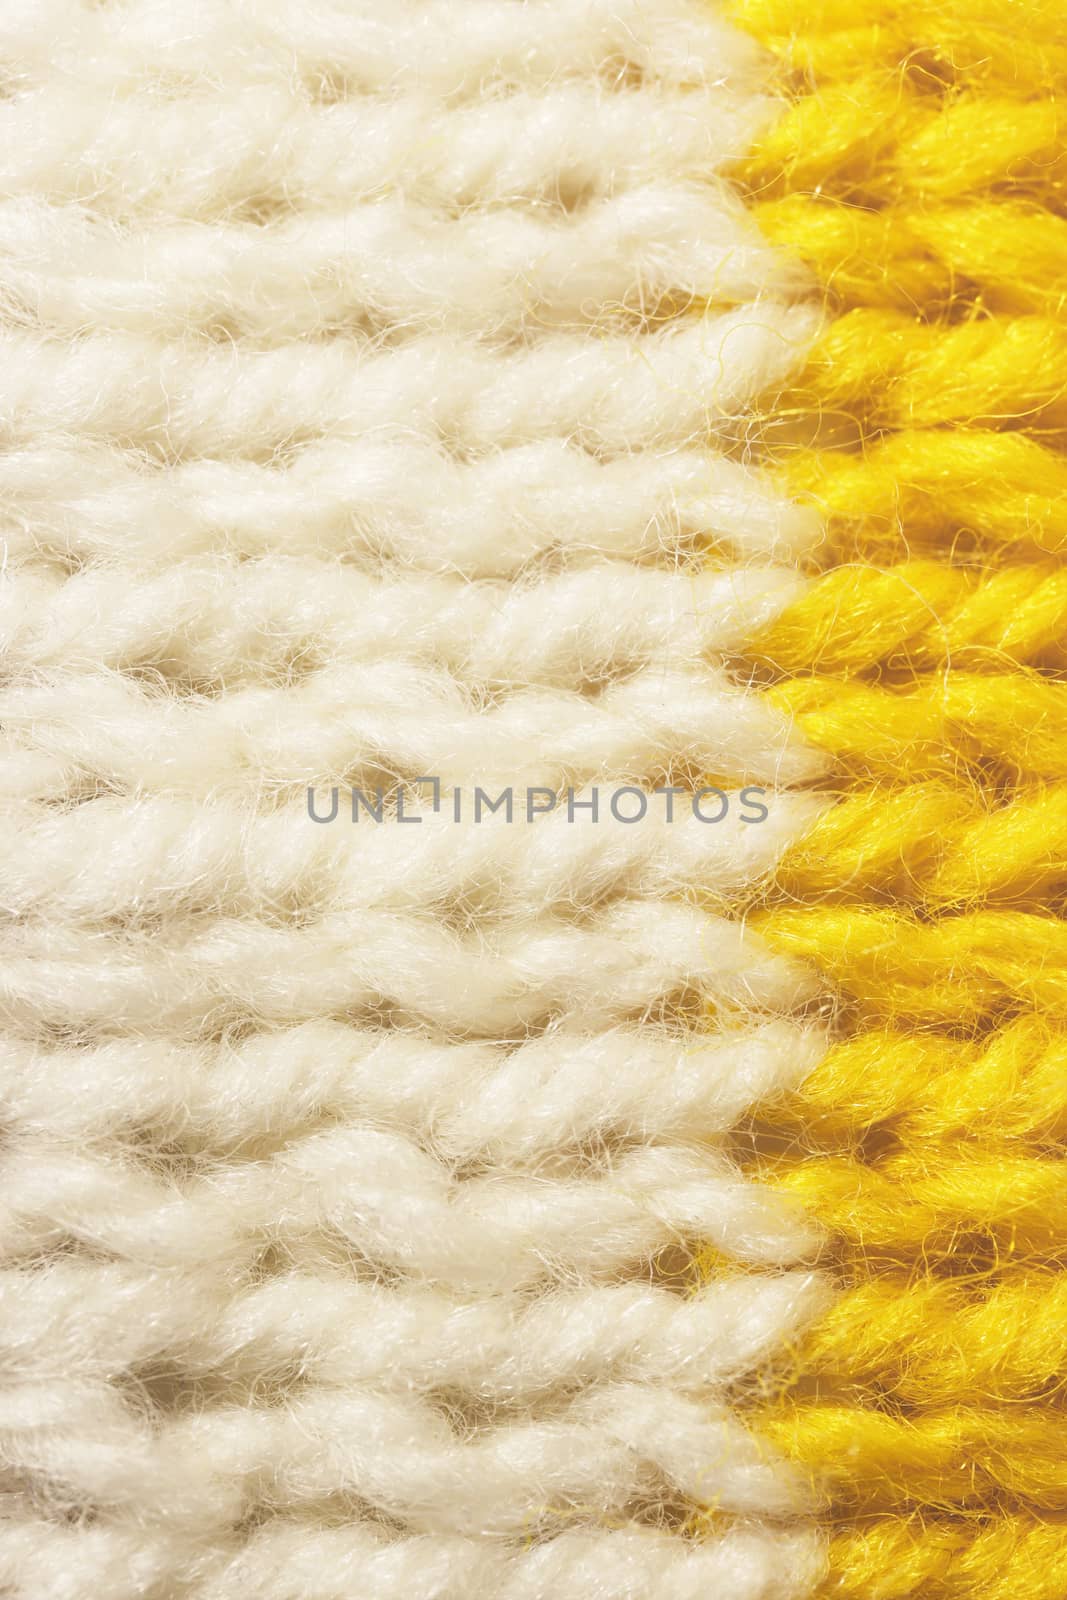 White Yellow Wool Knitting Texture. Horizontal Along Weaving Crochet Detailed Rows. Sweater Textile Background. Macro Closeup.